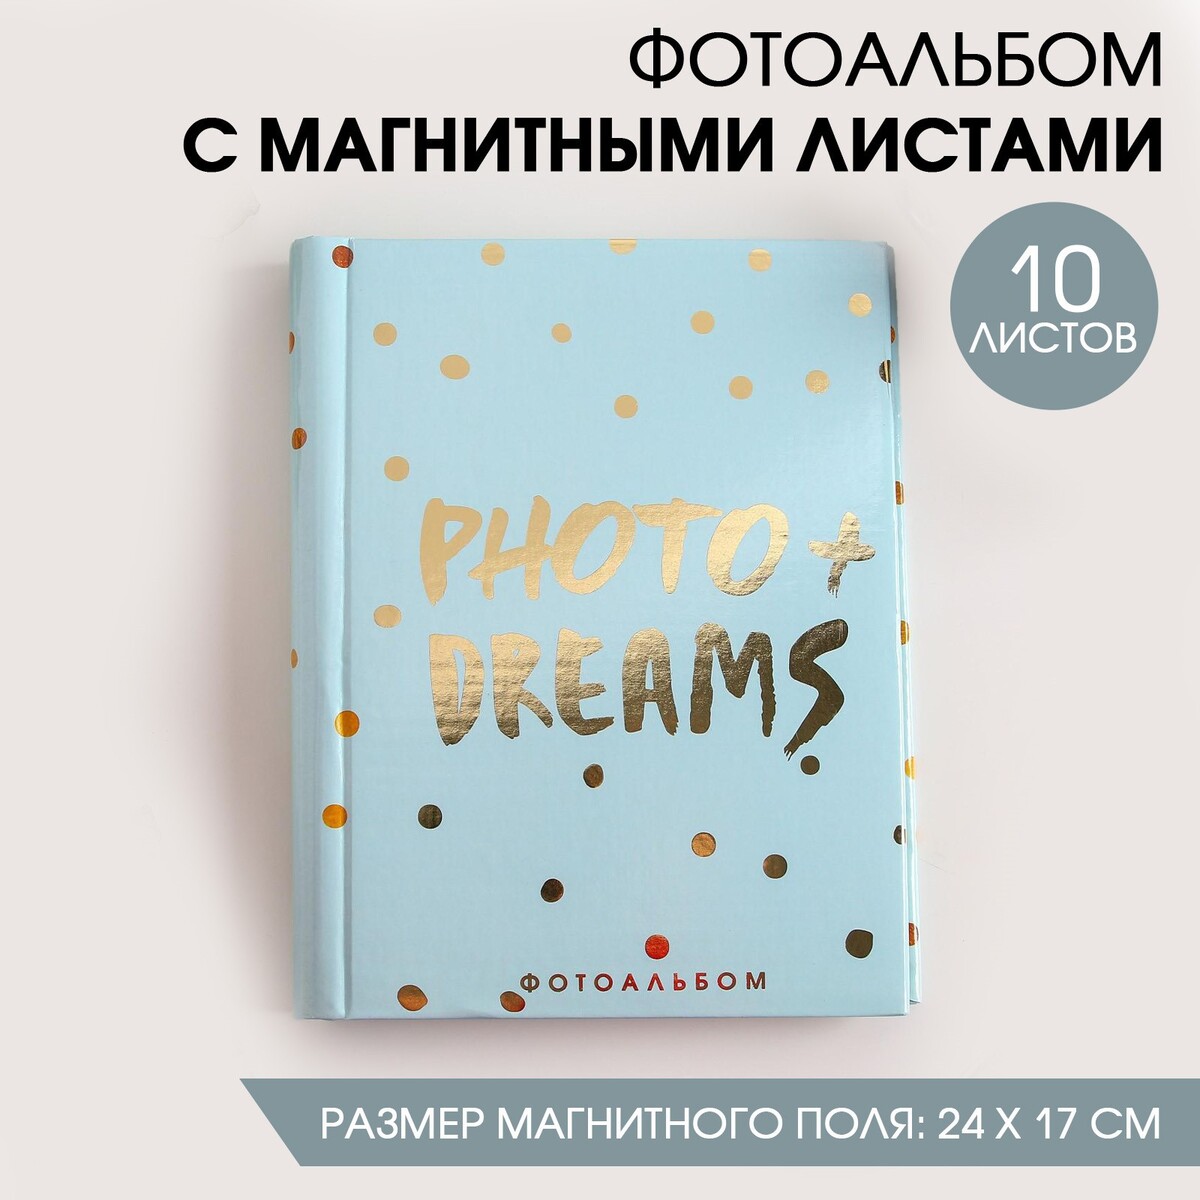 Фотоальбом photo + dreams, 10 магнитных листов фотоальбом 50 магнитных листов